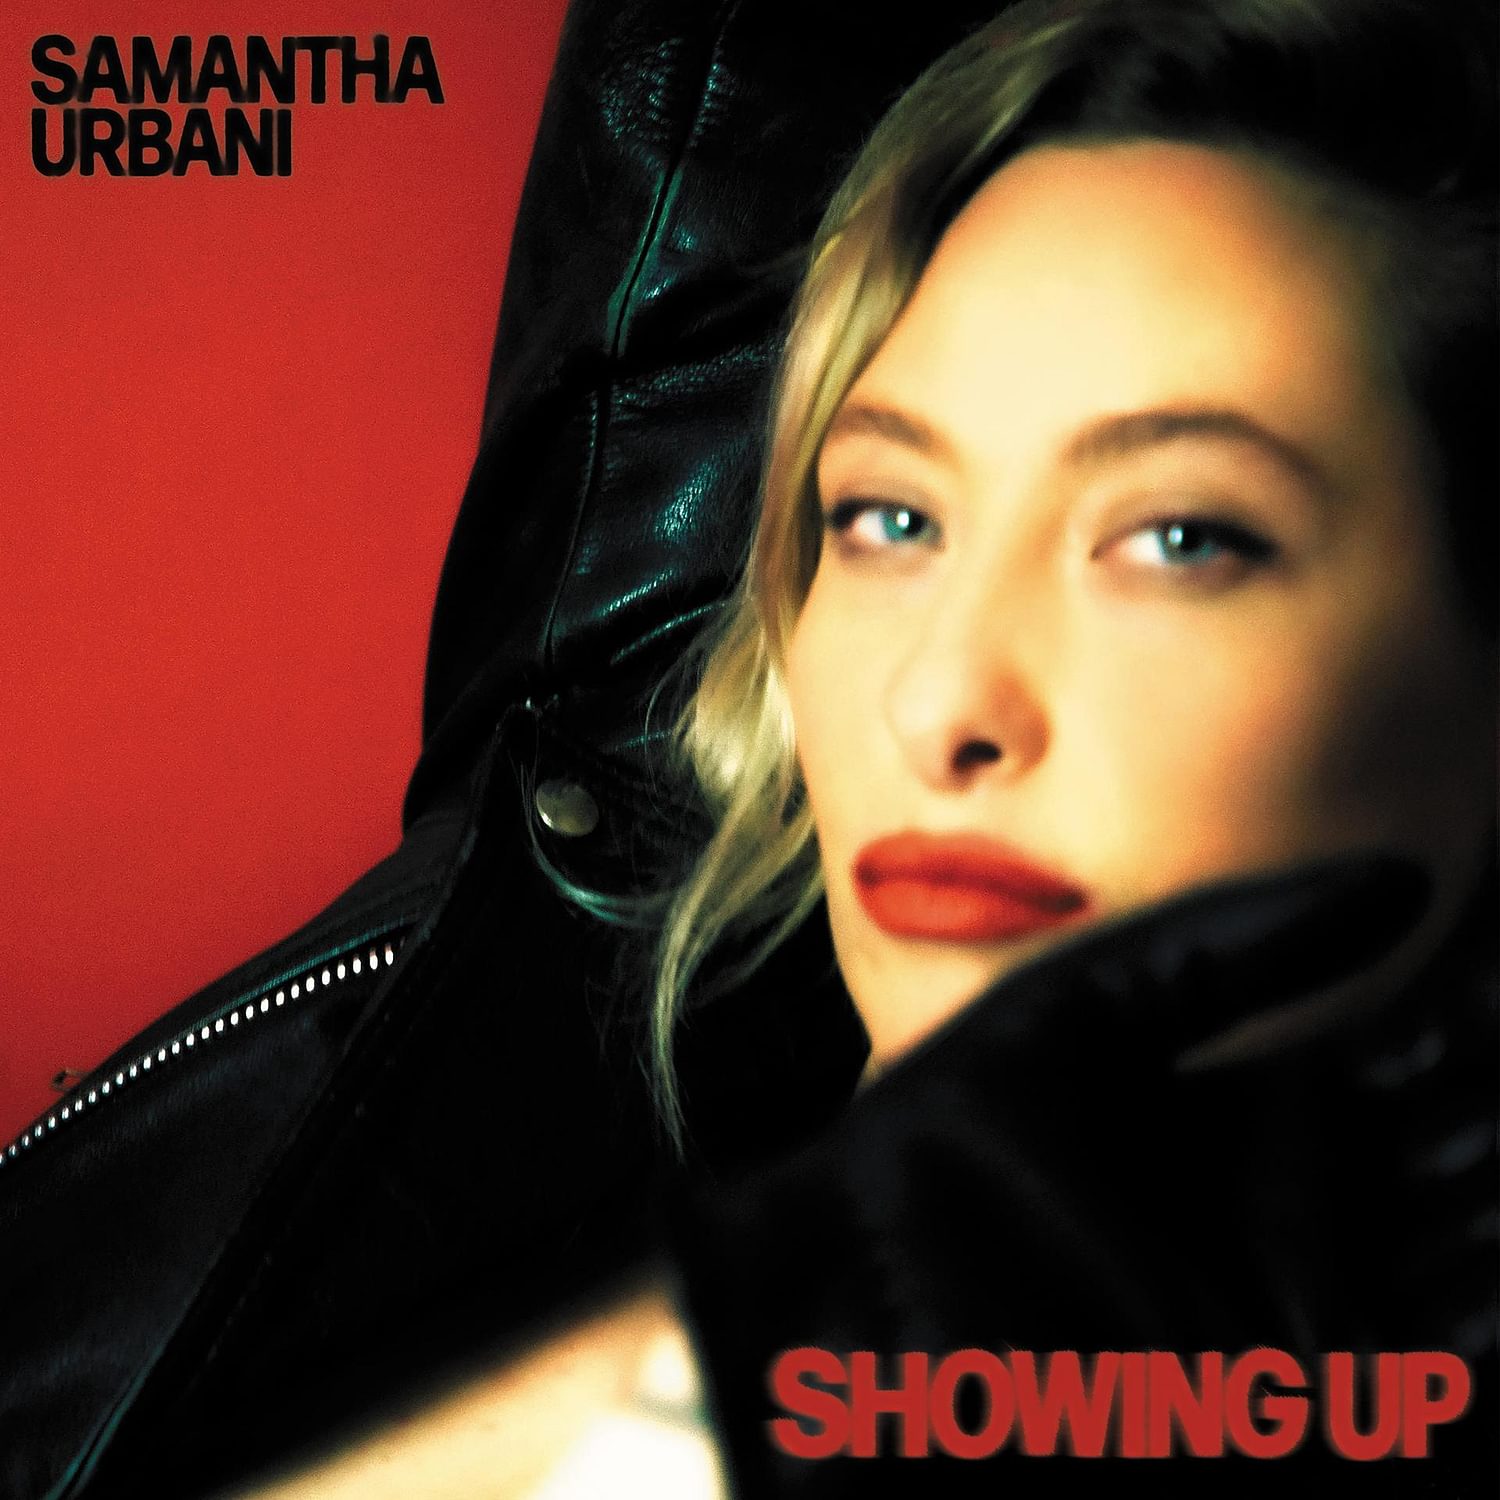 <p><strong>Samantha Urbani</strong> - Showing Up</p>